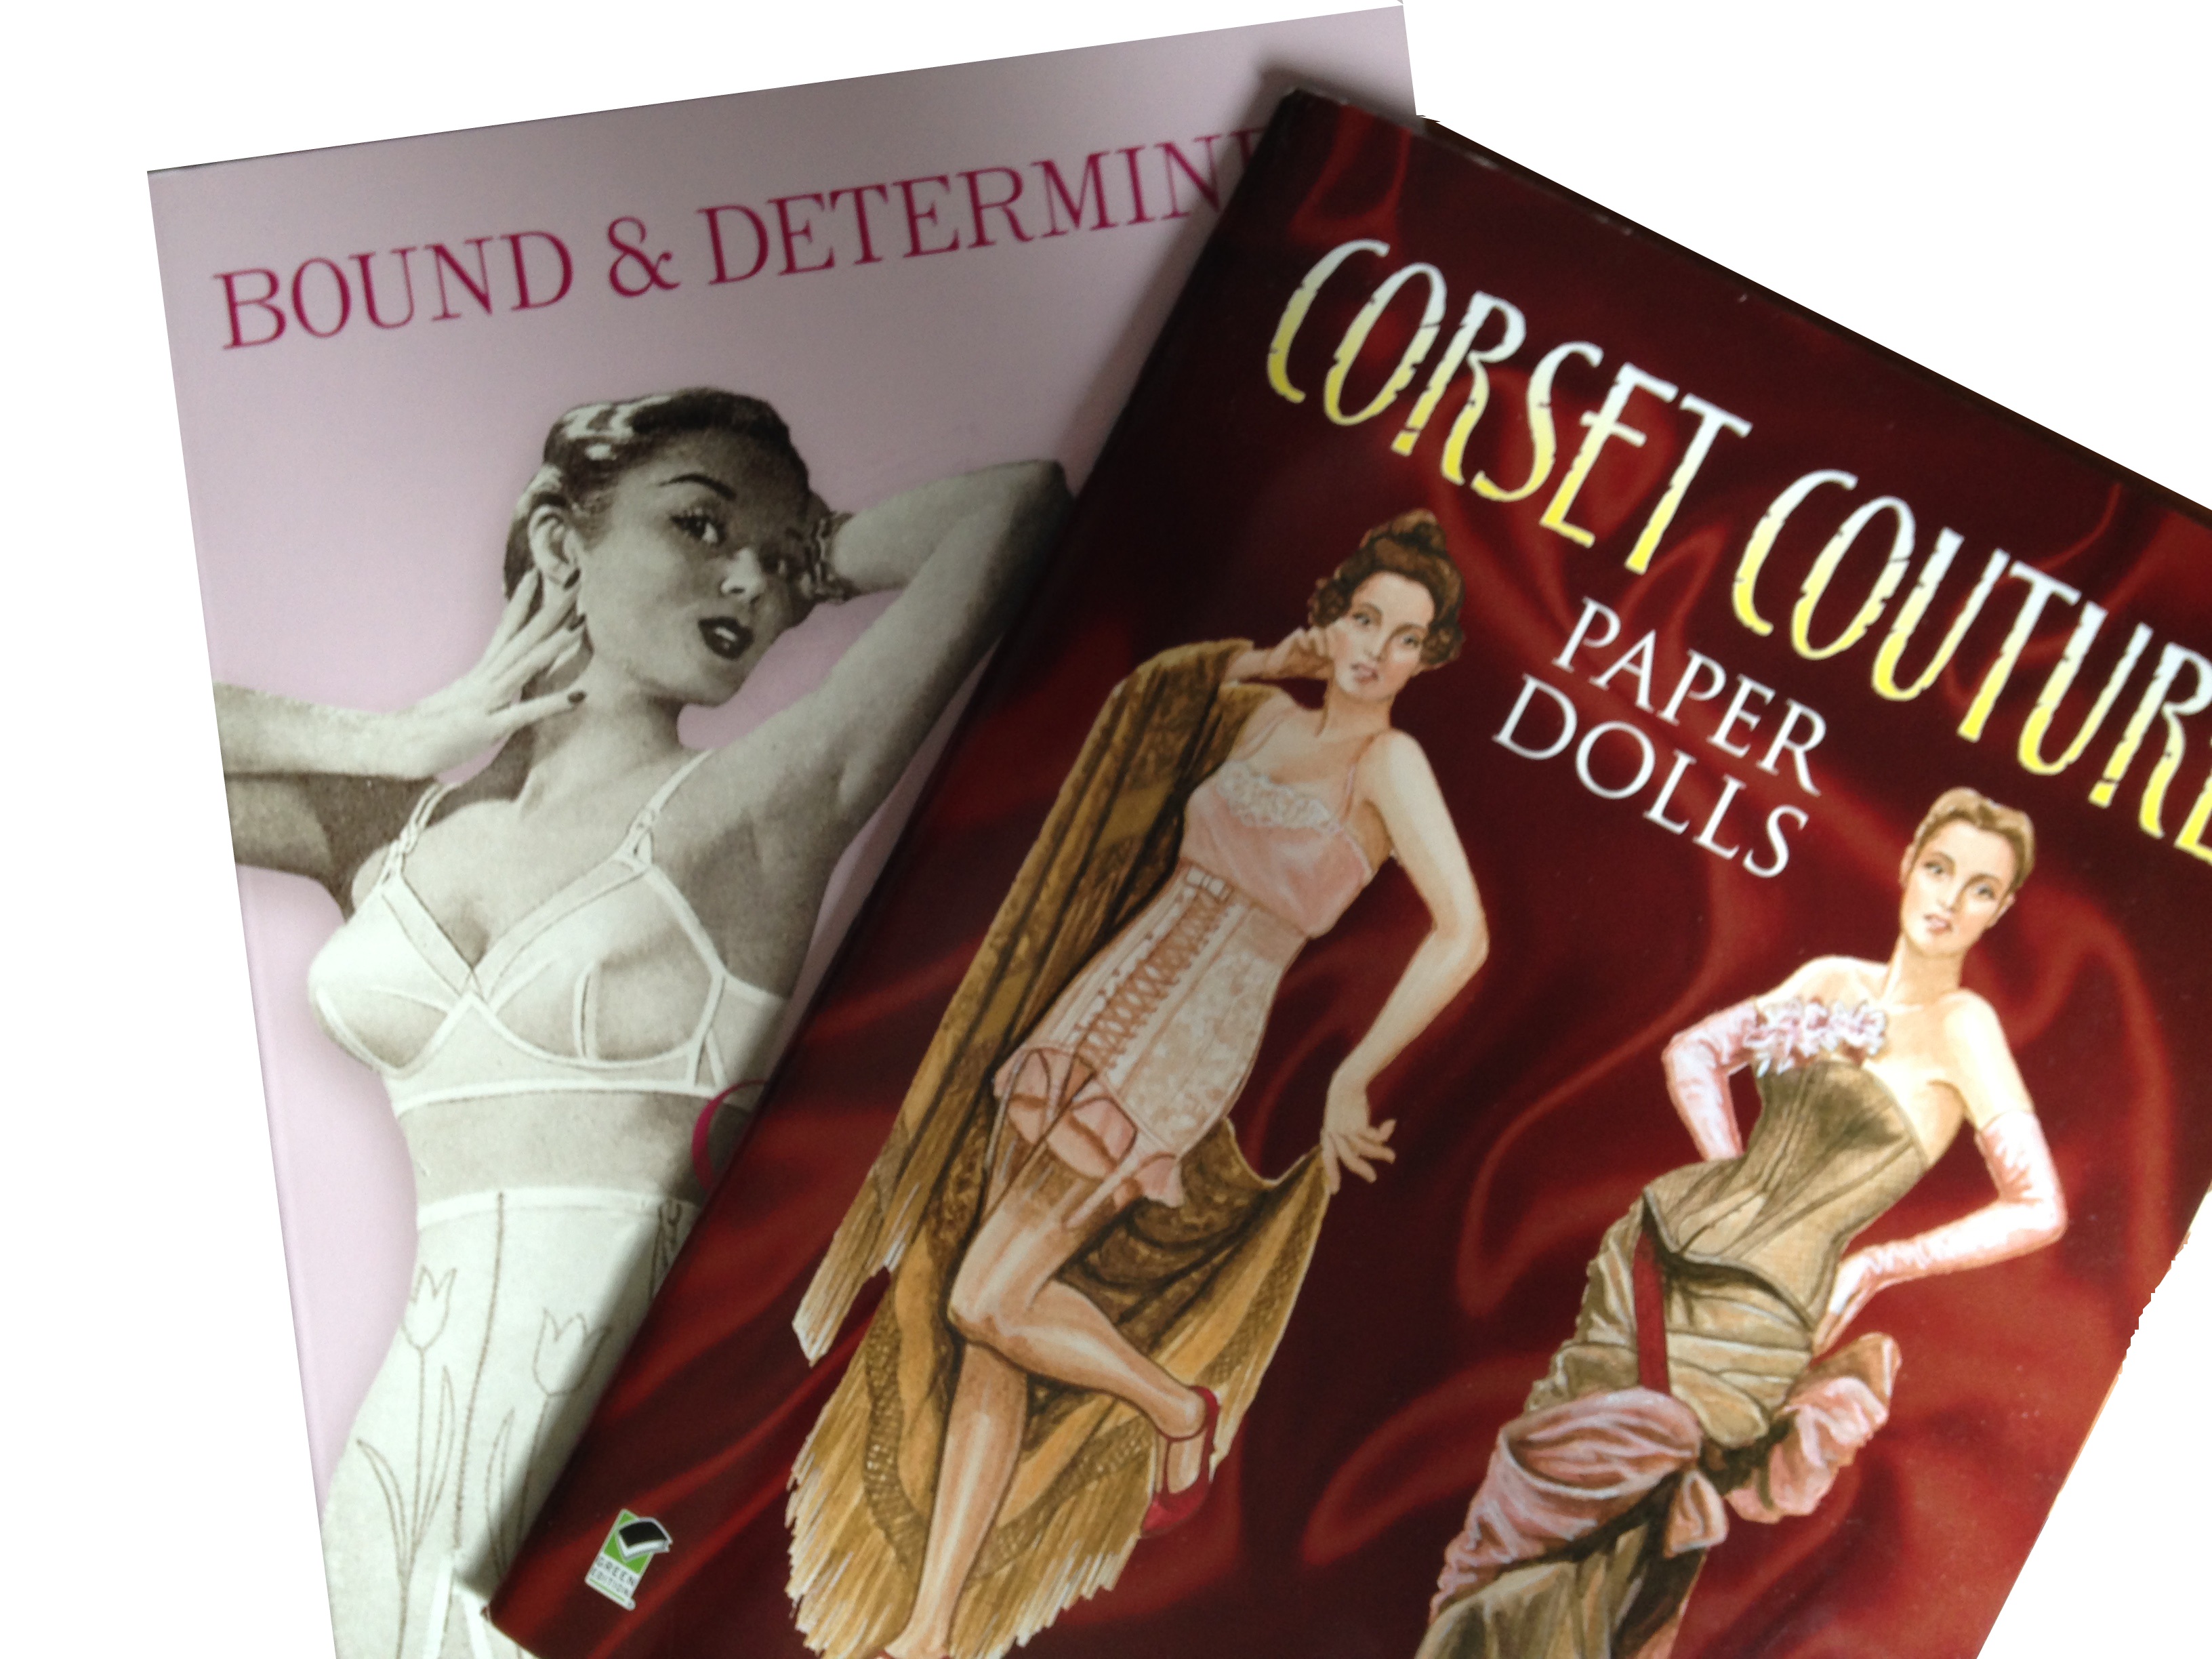 Win two Corset books @ VintageDancer.com http://bitly.com/1DQjflD till 4/1/15